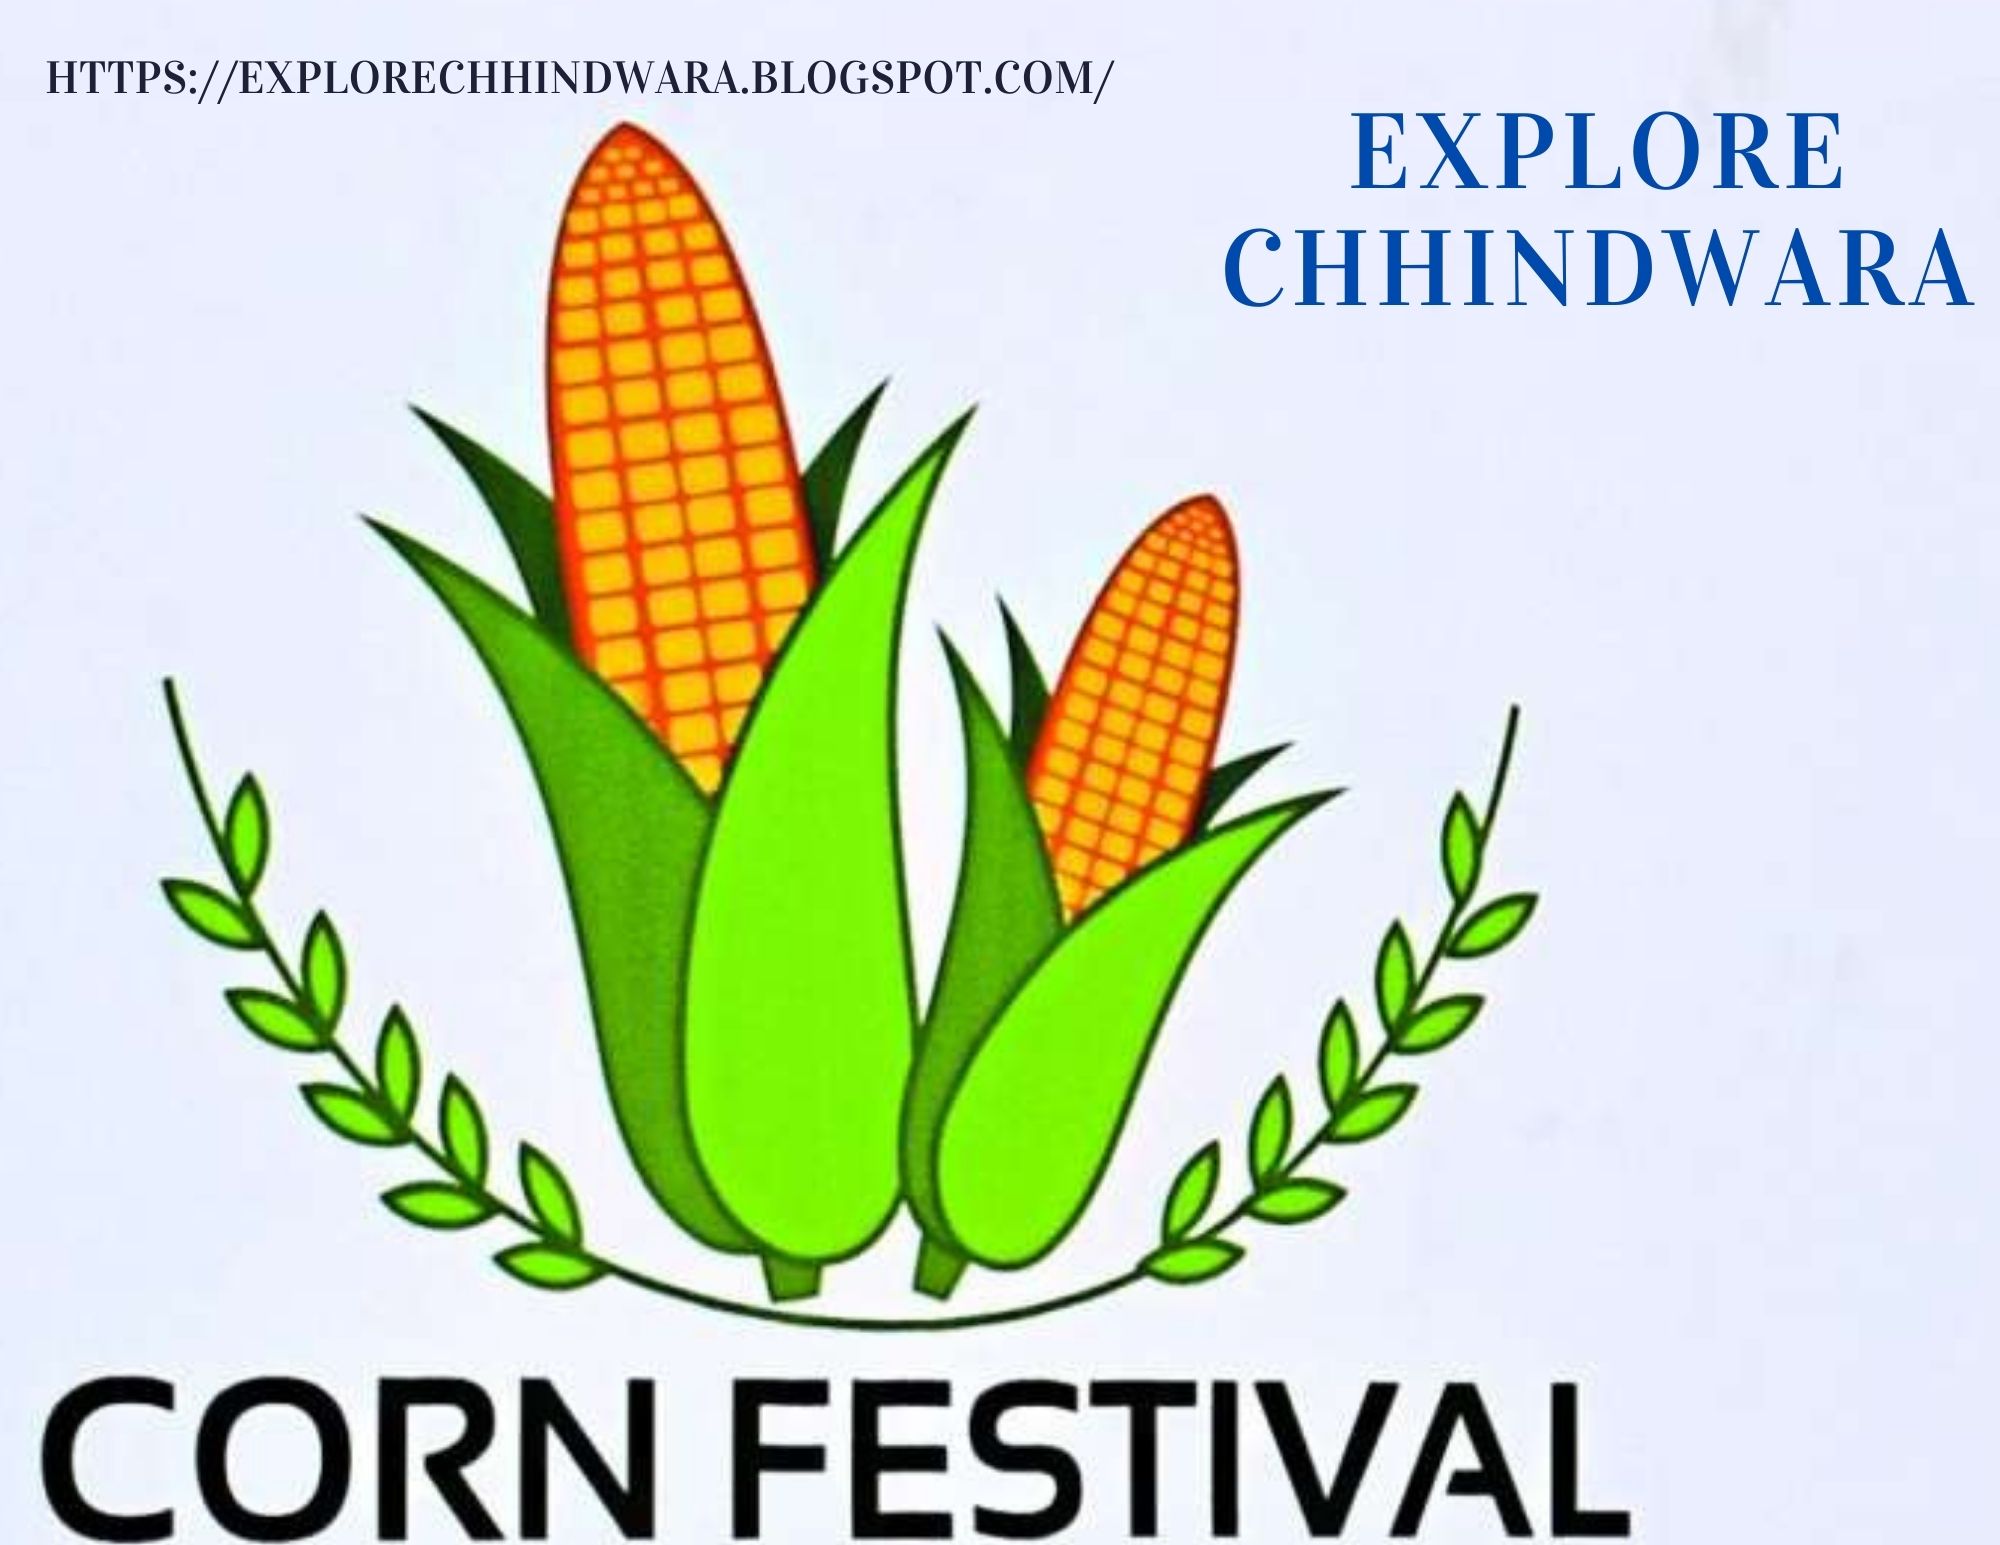 Corn festival Chhindwara Madhya Pradesh